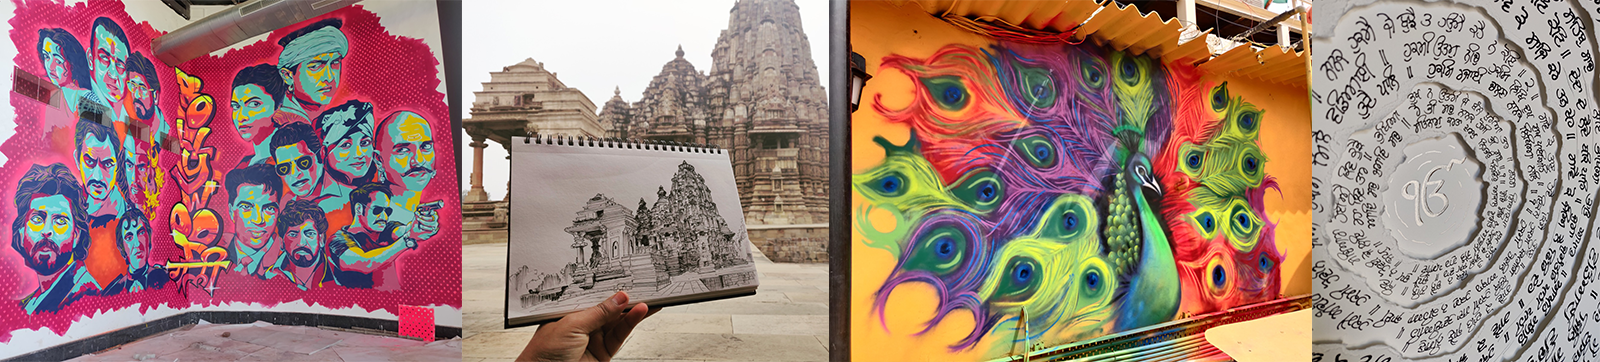 Chandigarh-Inspired Artist Gagandeep Singh and His Brand Crimson Arts India